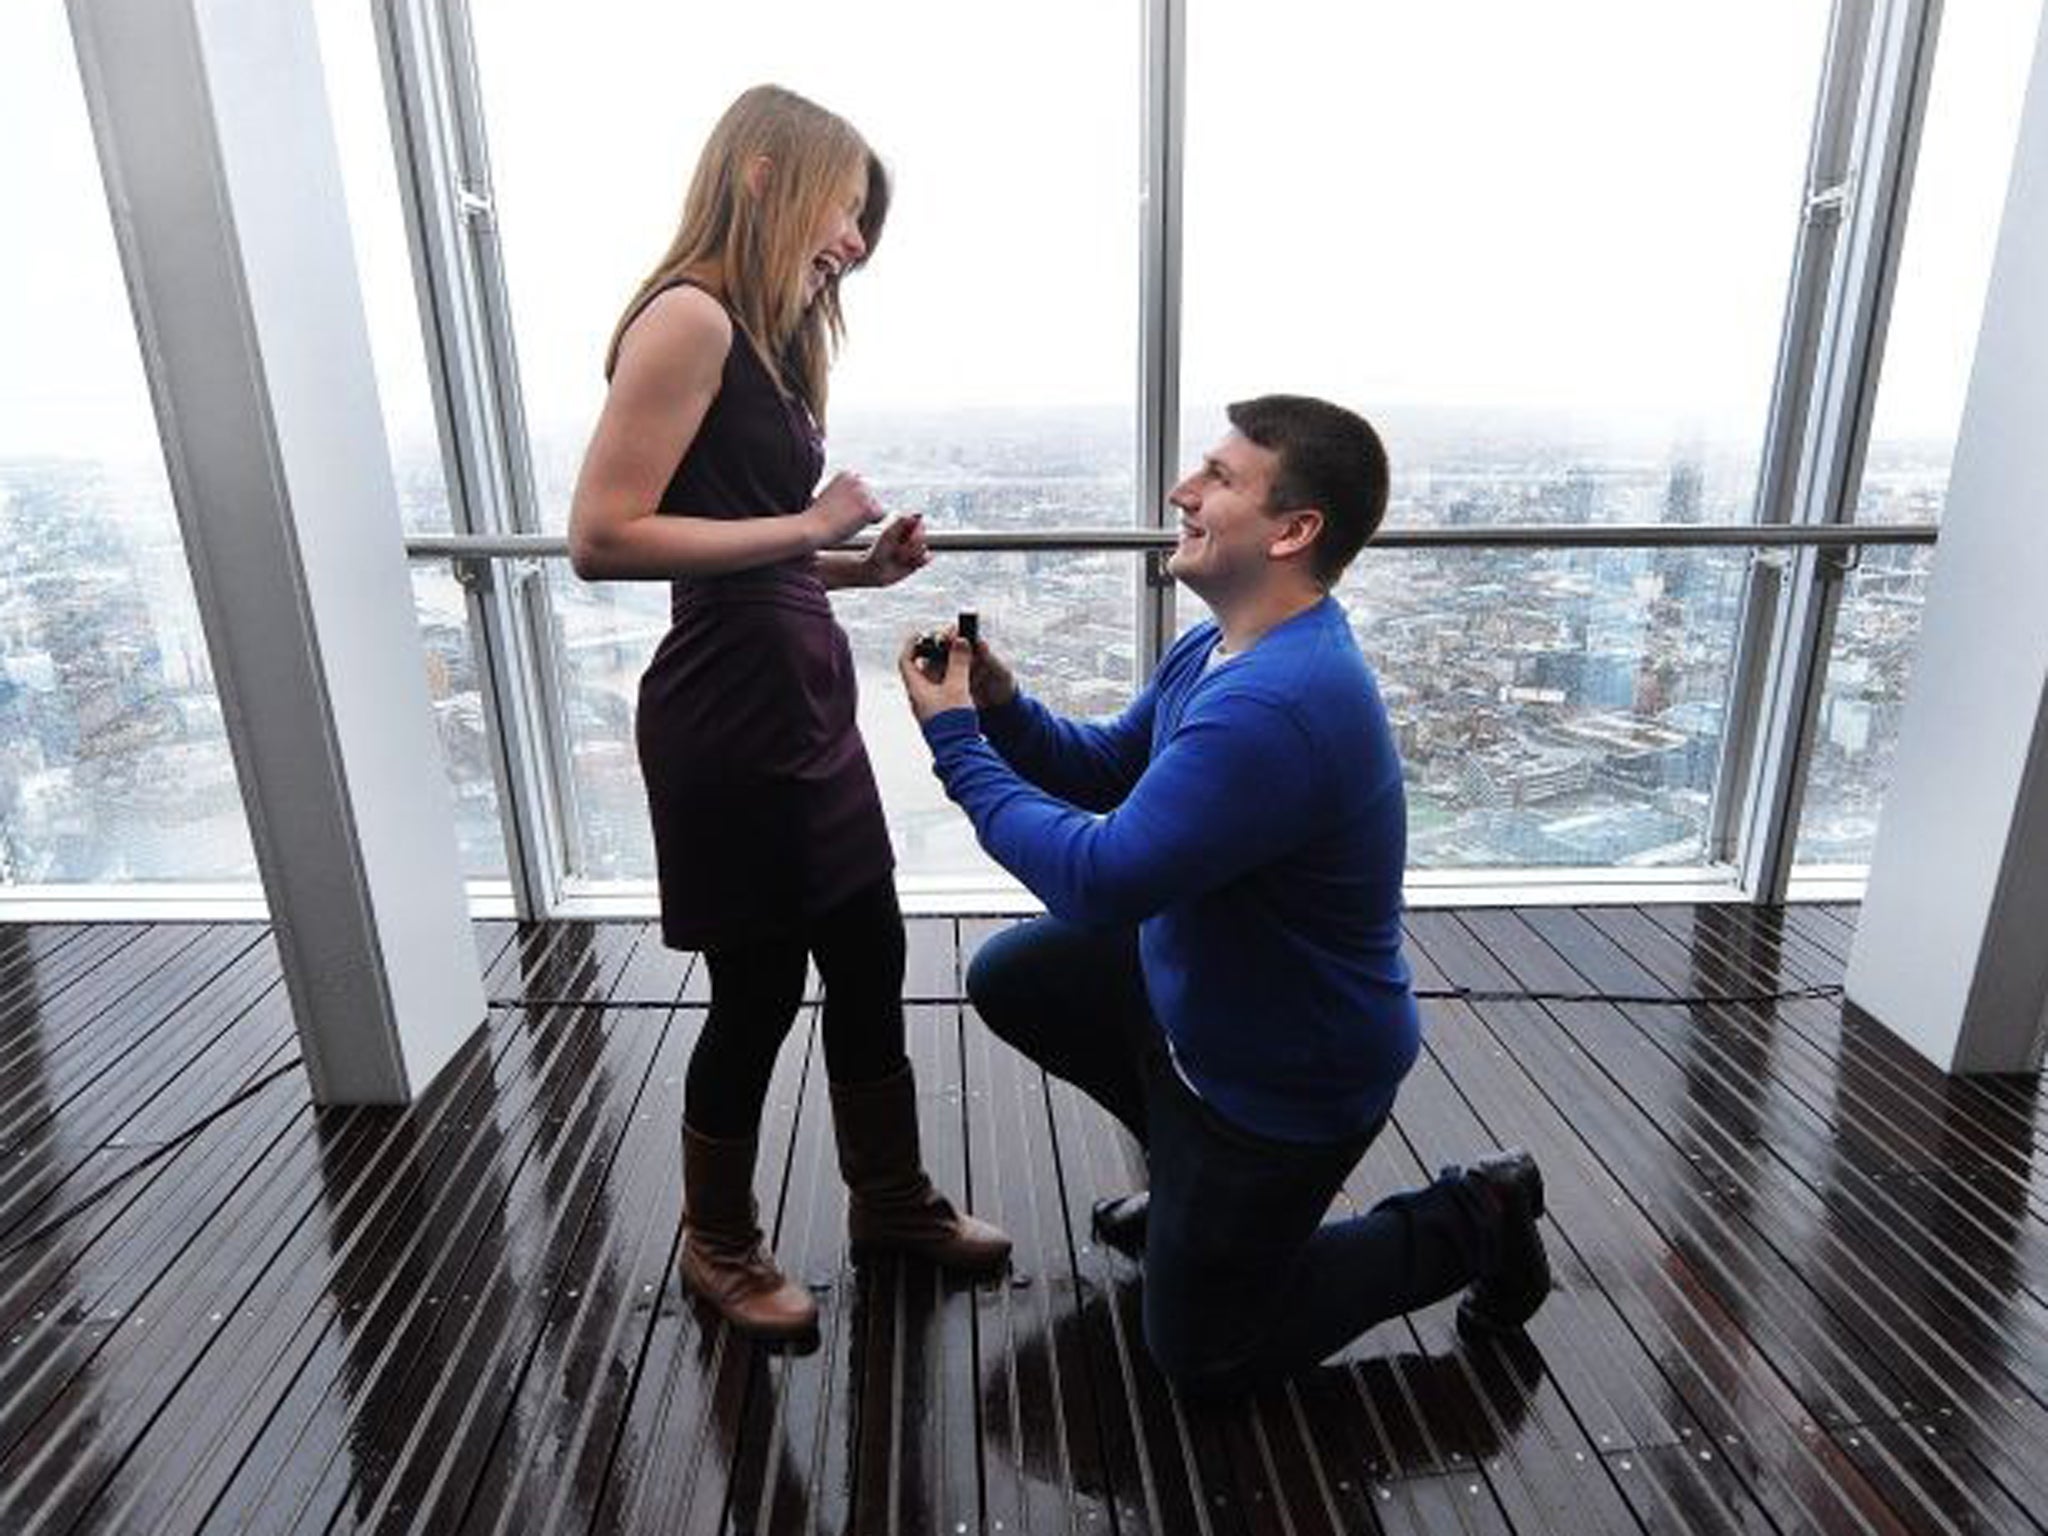 James Episcopou proposes to girlfriend Laura Taylor